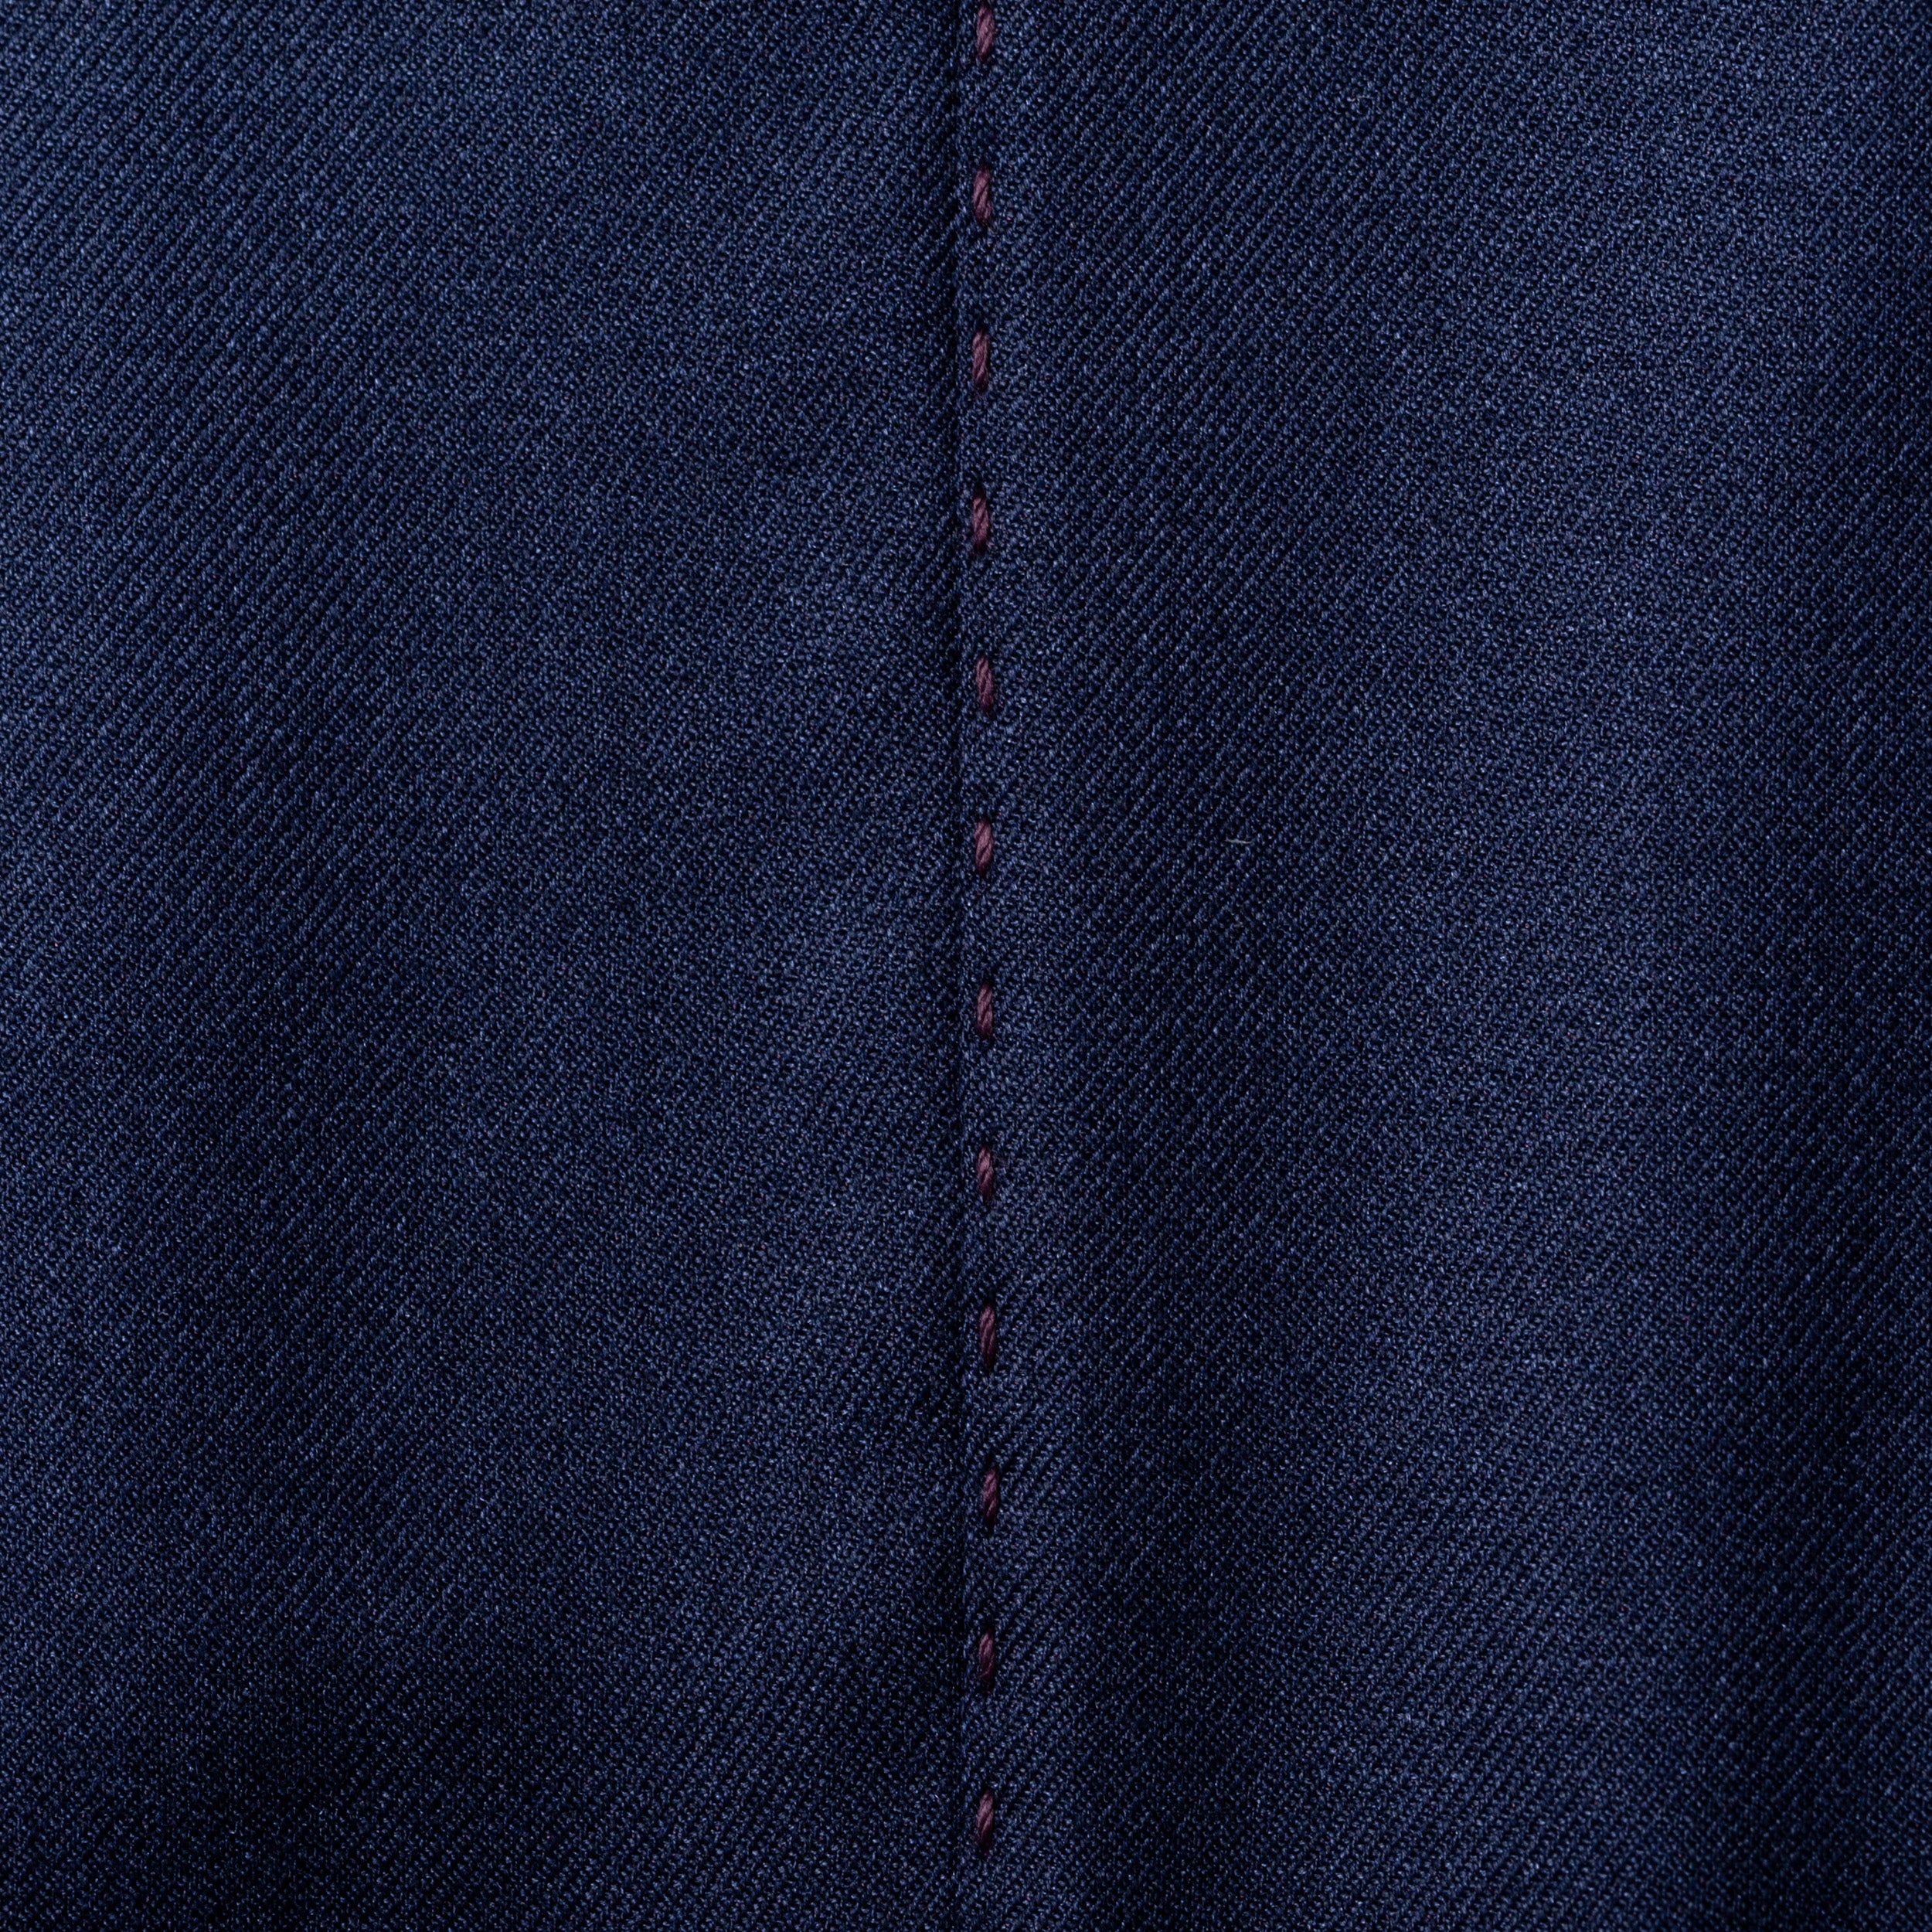 SARTORIA CASTANGIA Navy Blue Cashmere-Silk Jacket Silk Lining 50 NEW US 40 CASTANGIA